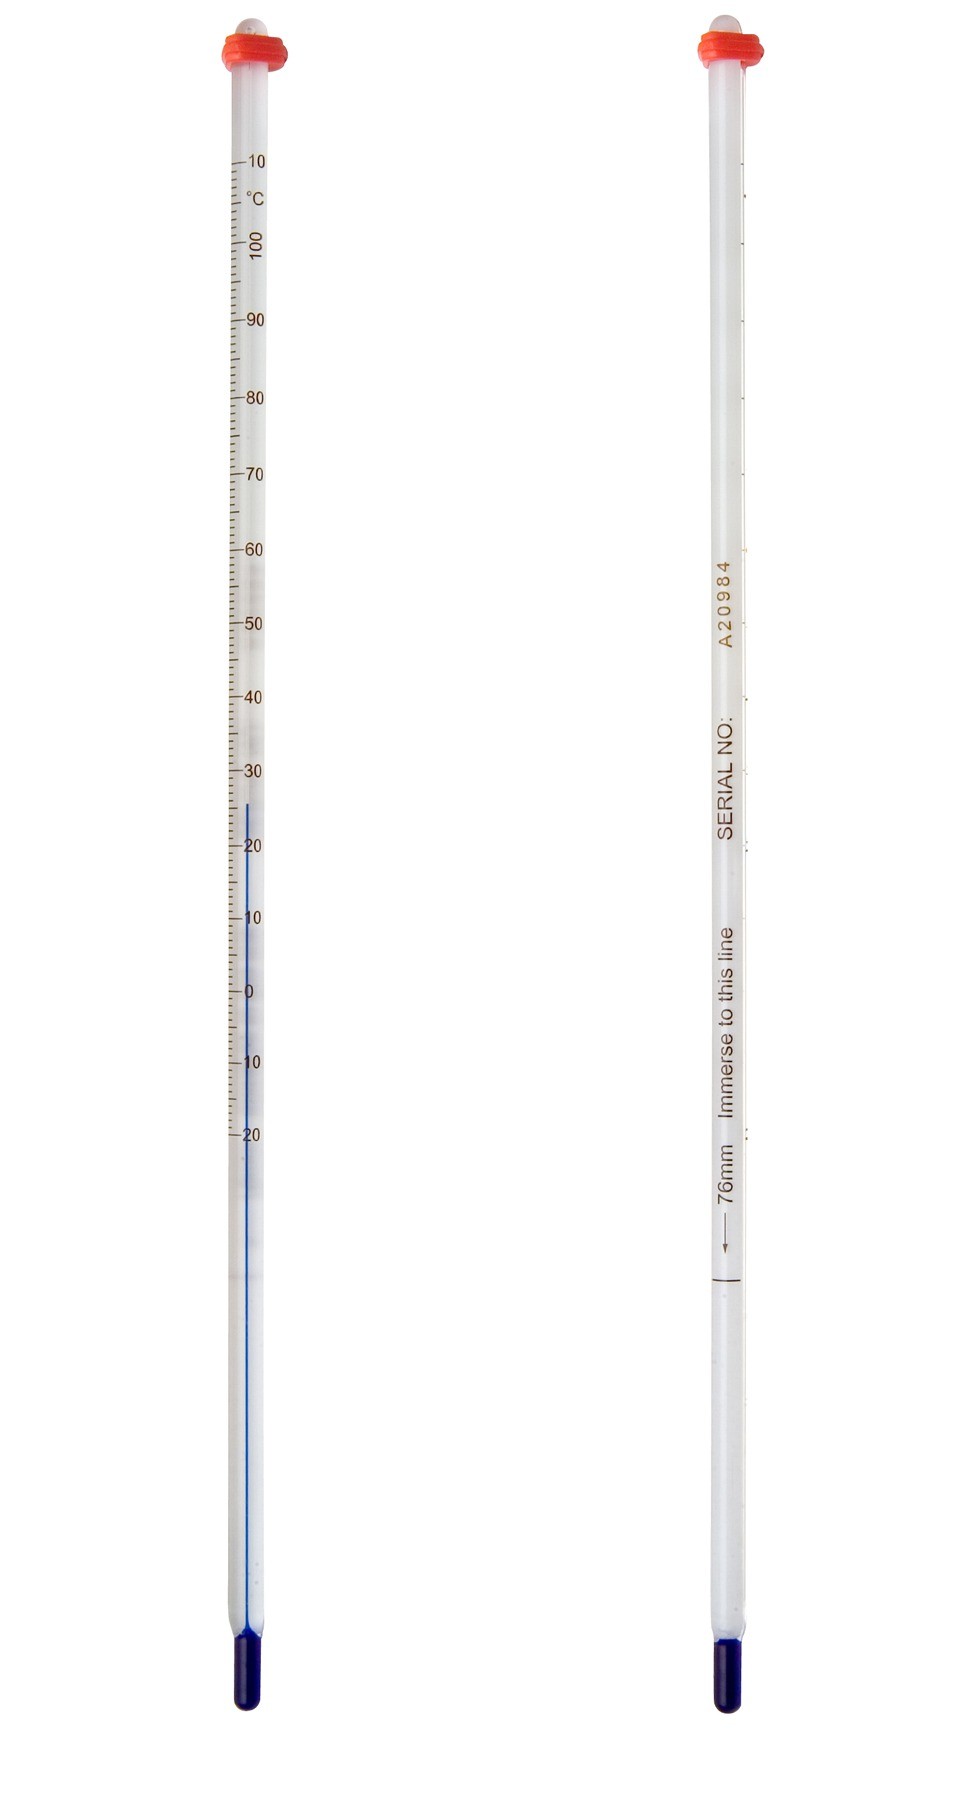 Plastic Panel Mount; 0/50C H-B DURAC Electronic Thermometer-Hygrometer 20/99 Percent Humidity Range Proprietary B61506-0300